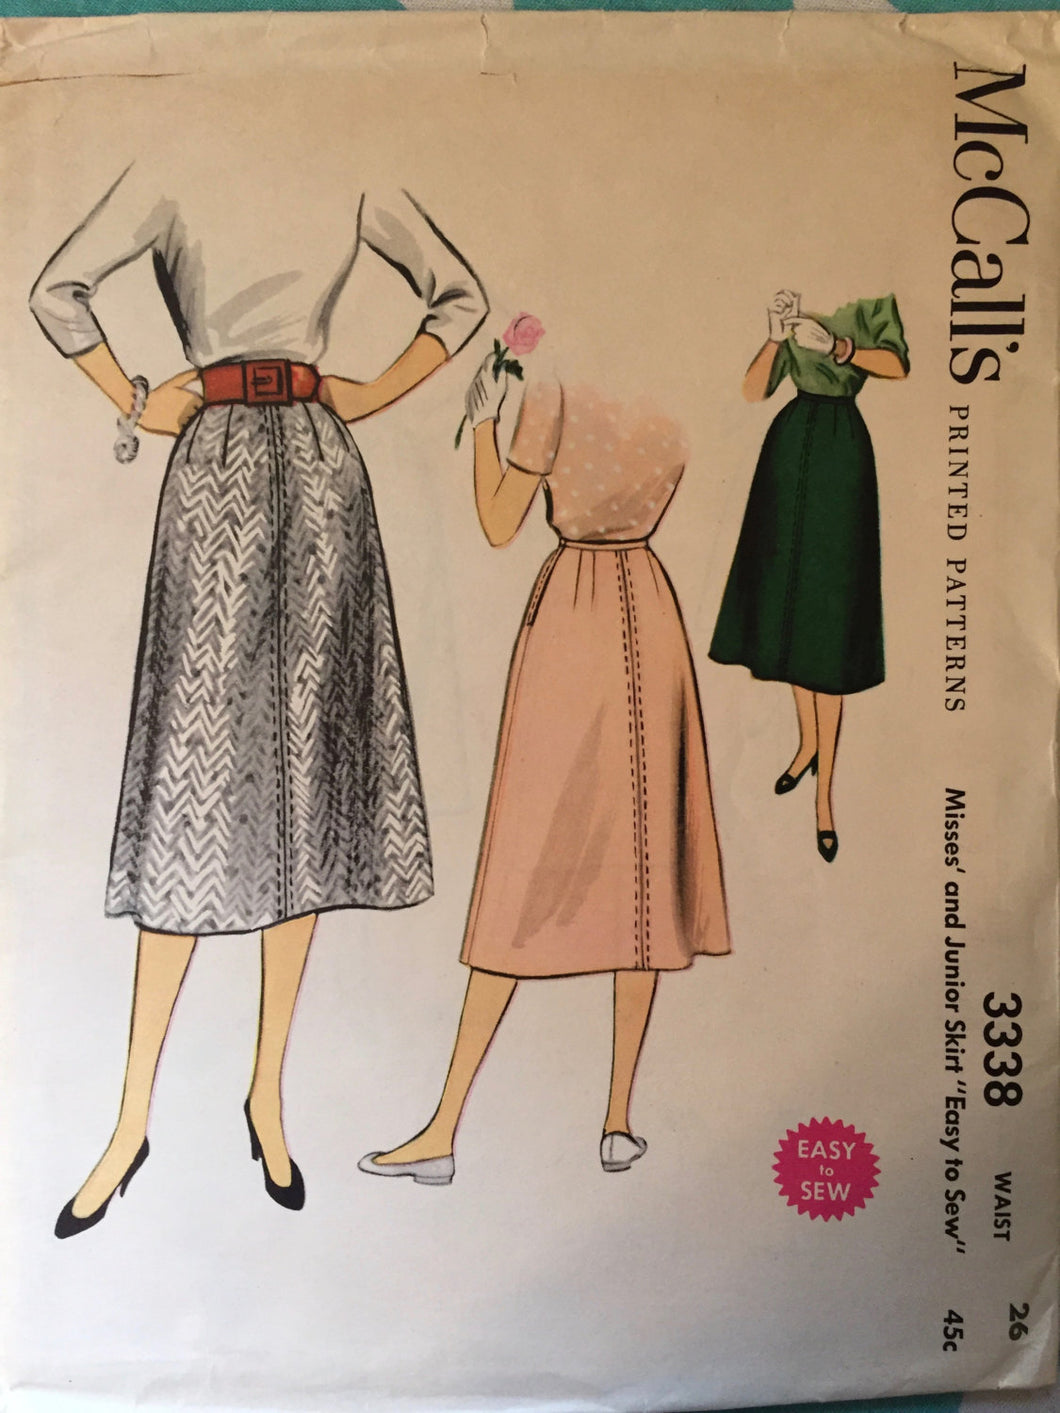 Vintage Sewing Pattern / 1950's Skirt Pattern / McCall's 3338 / Waist 26 / Vintage McCall's Pattern / Easy to Sew / 4 Gore Skirt